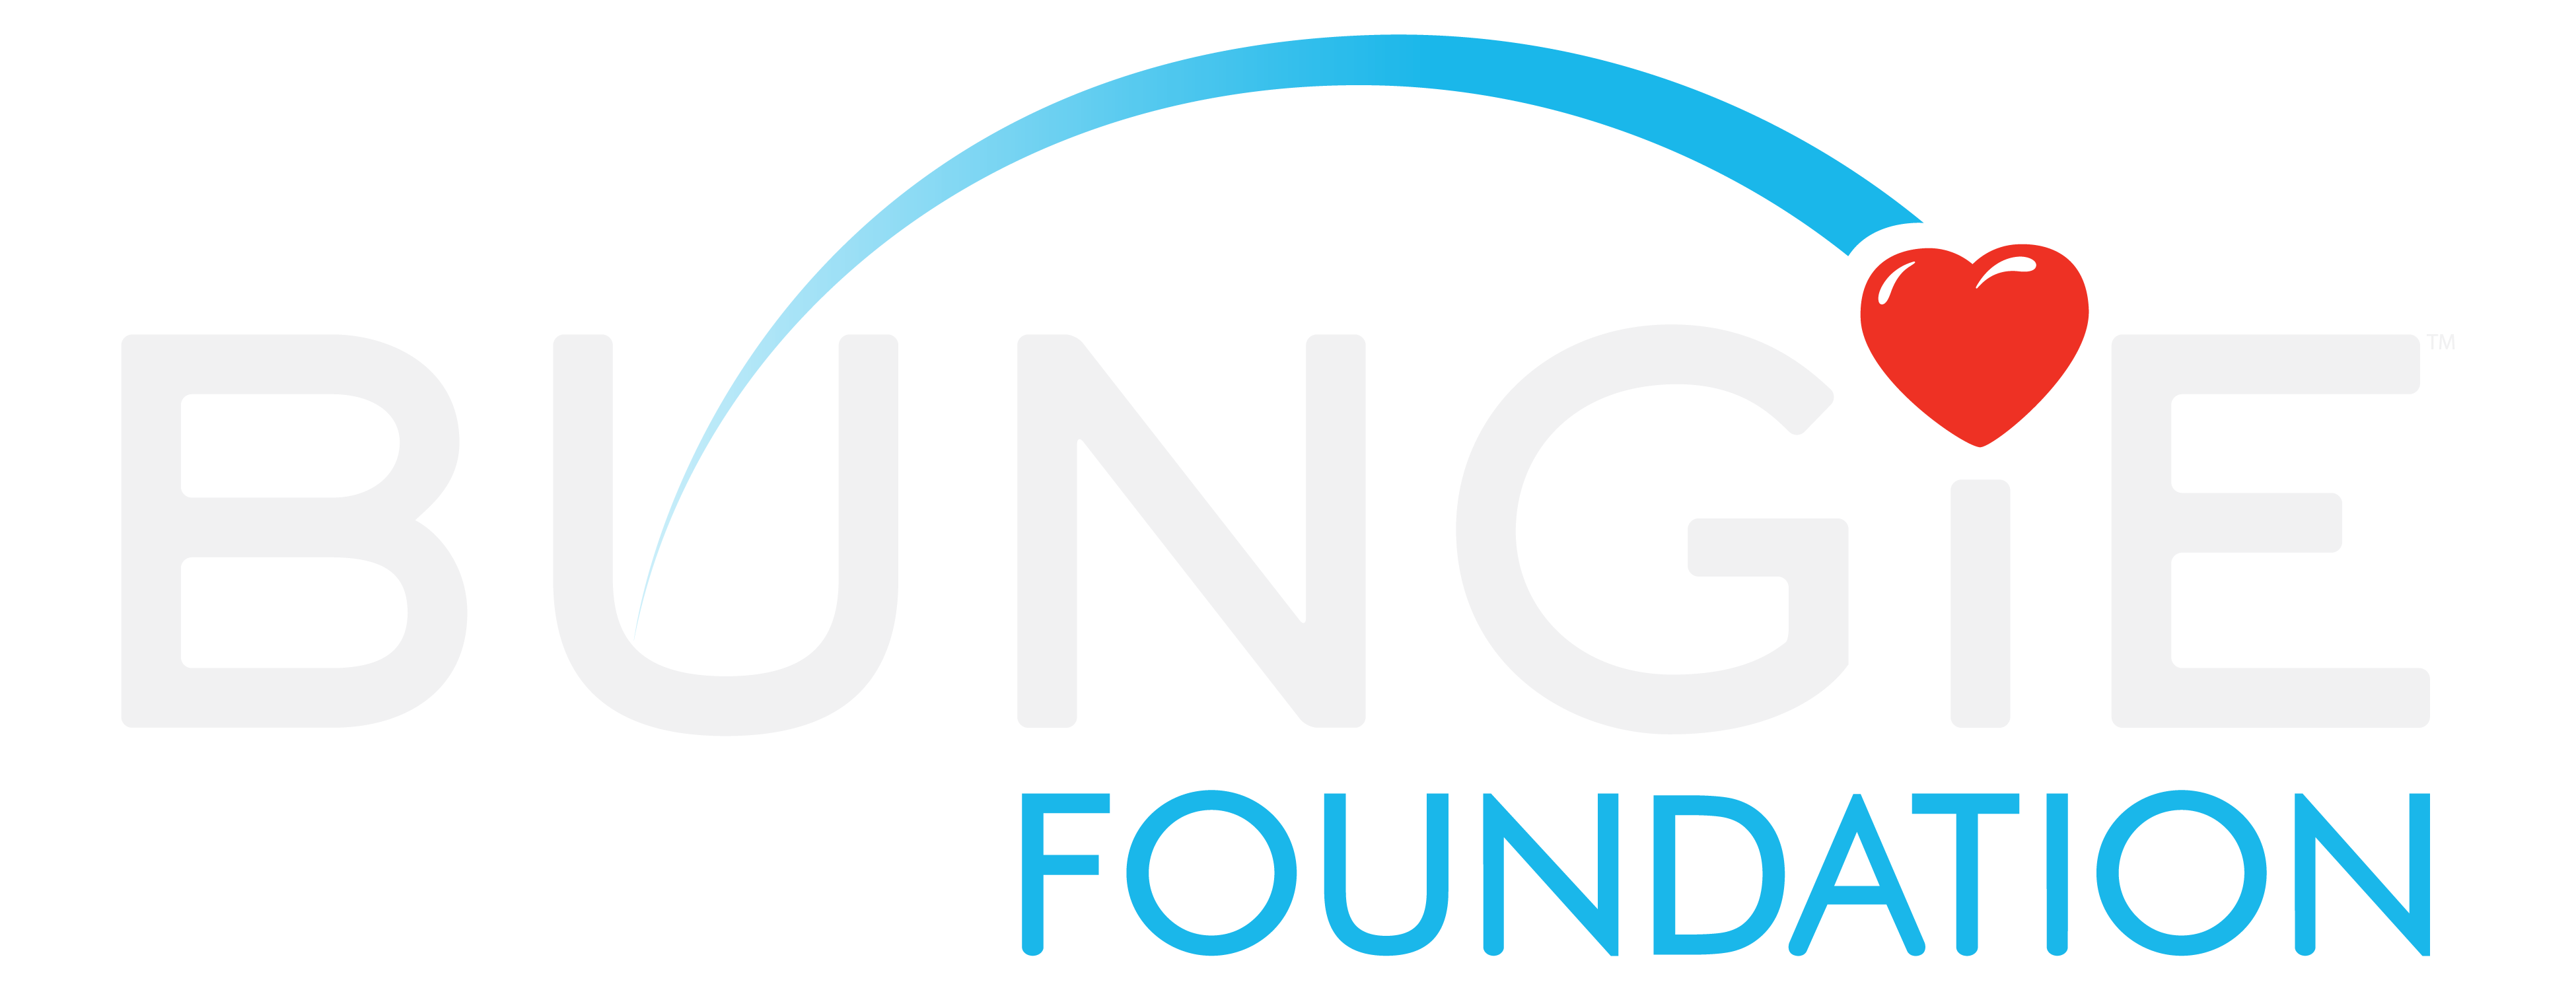 Bungie Foundation